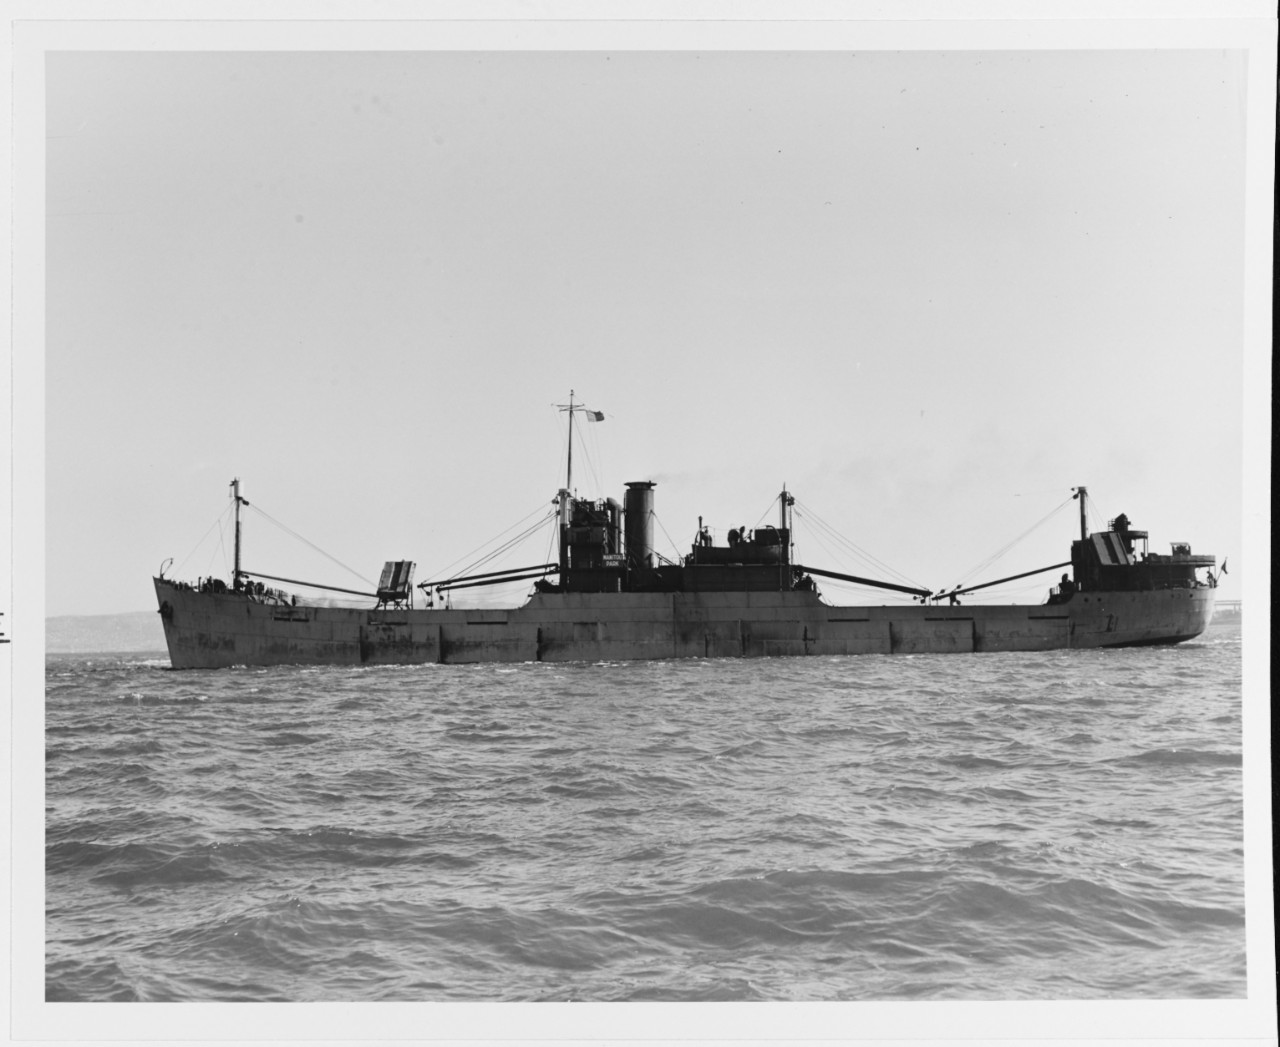 S.S. MANITOU PARK (British Merchant Freighter, 1943-1971)